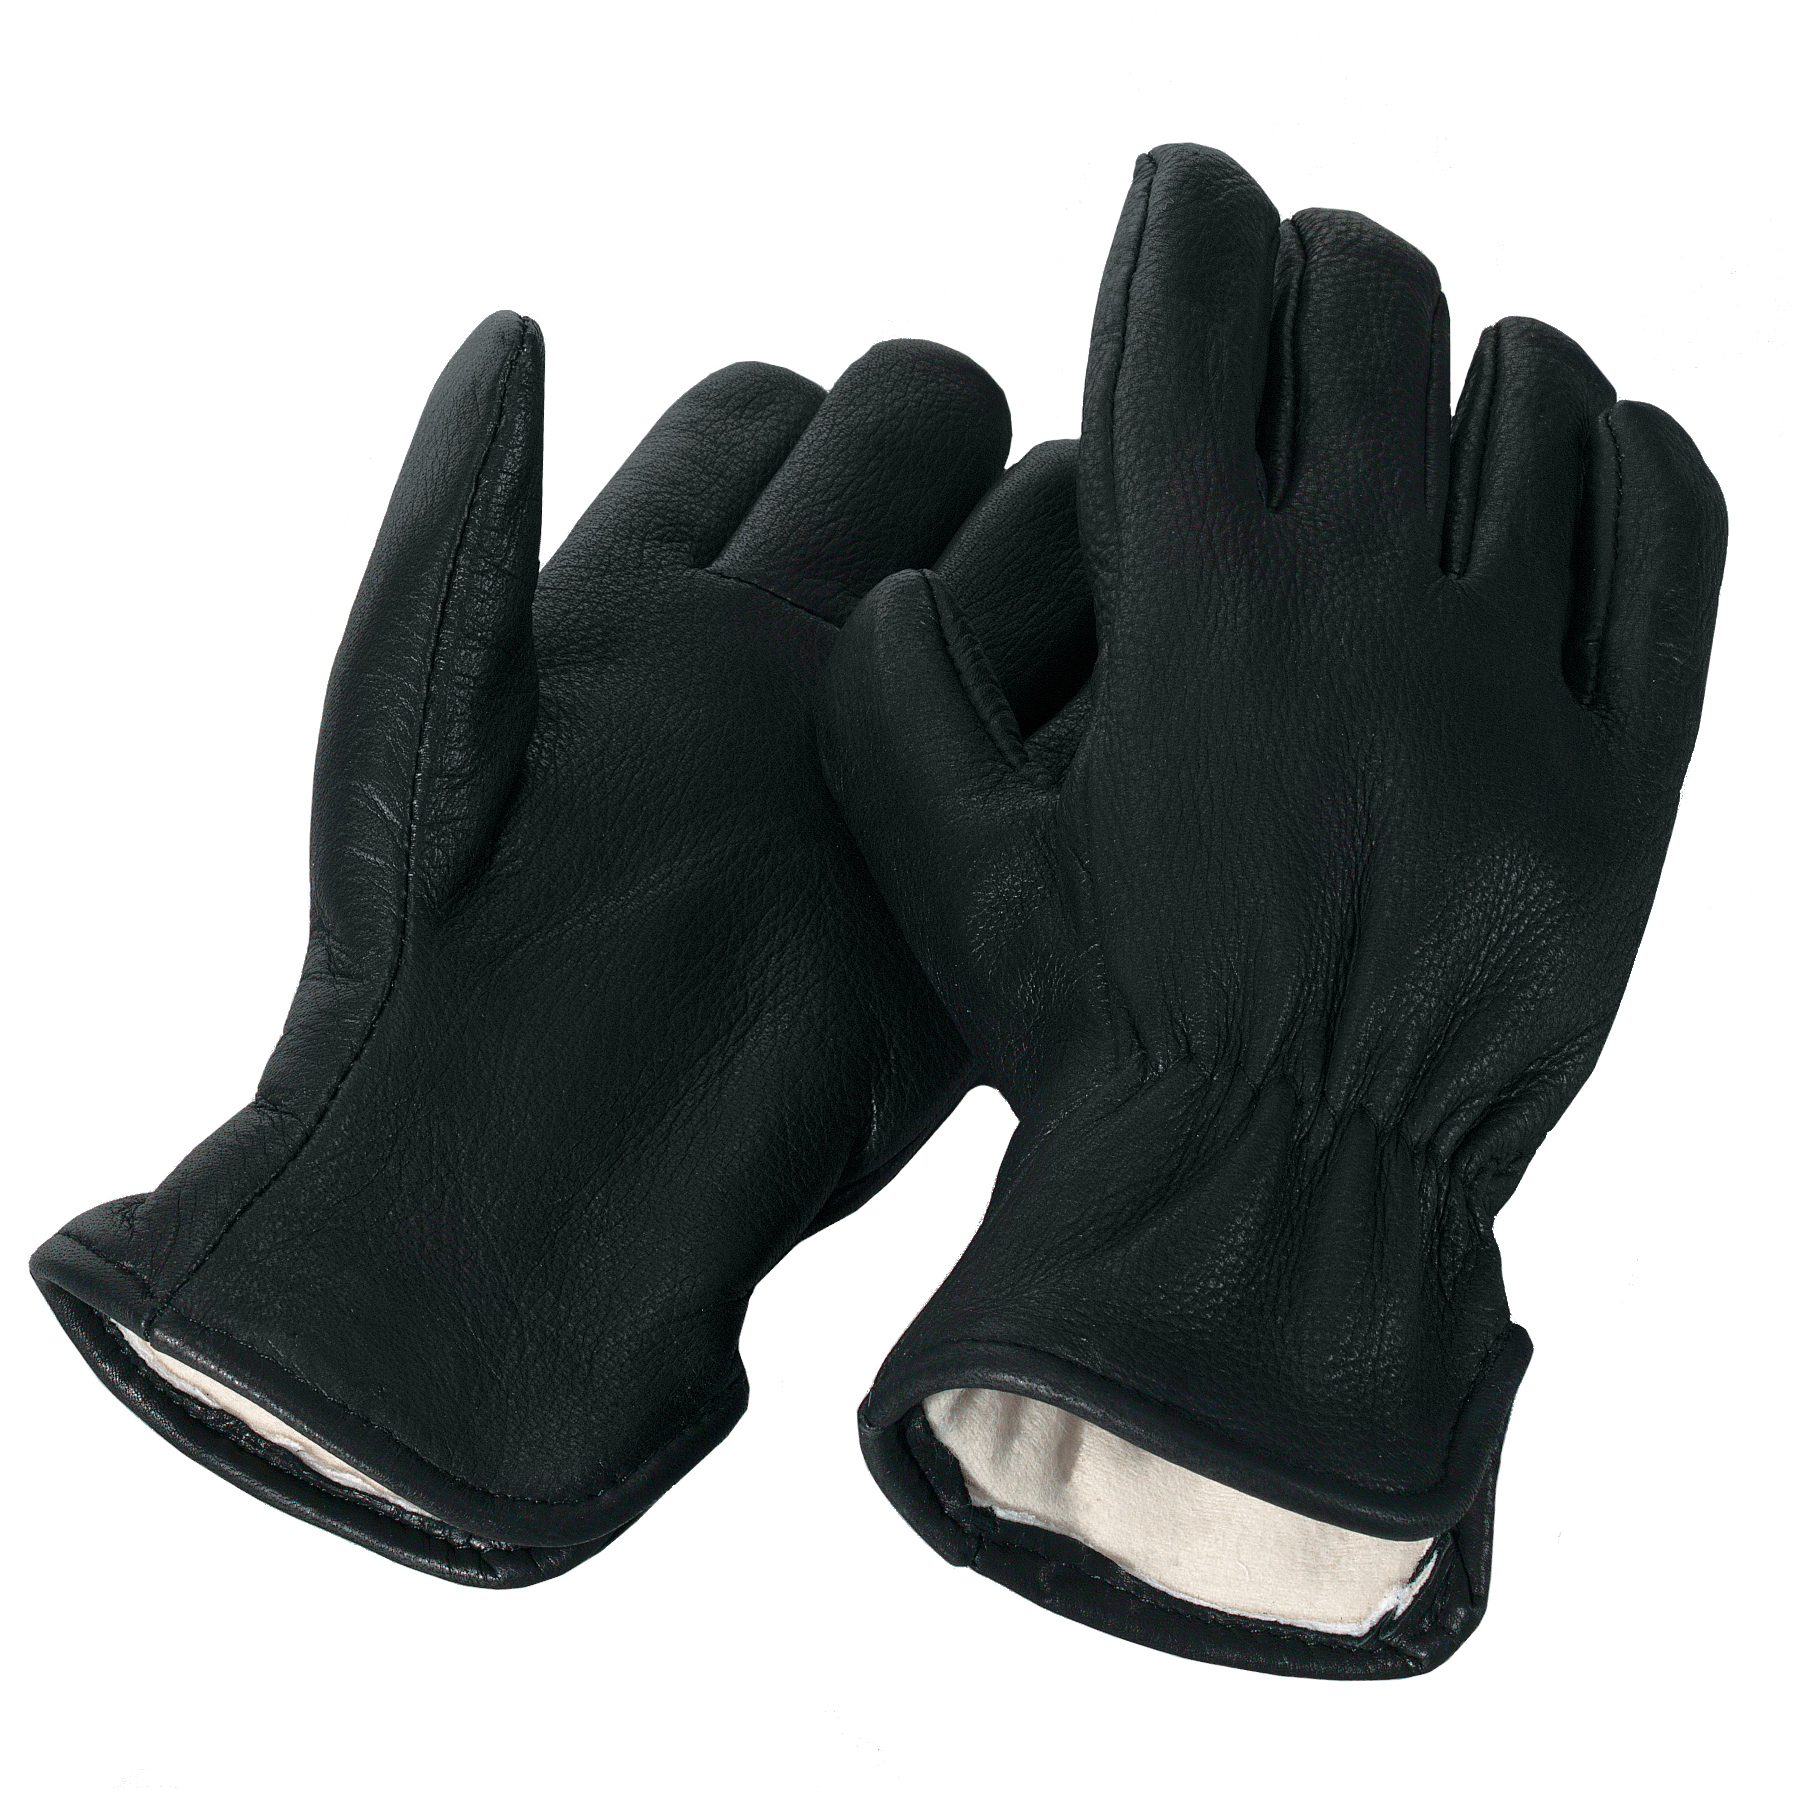 https://harrisleather.com/wp-content/uploads/2013/12/Insulated-Work-Gloves-BlackWP.jpg